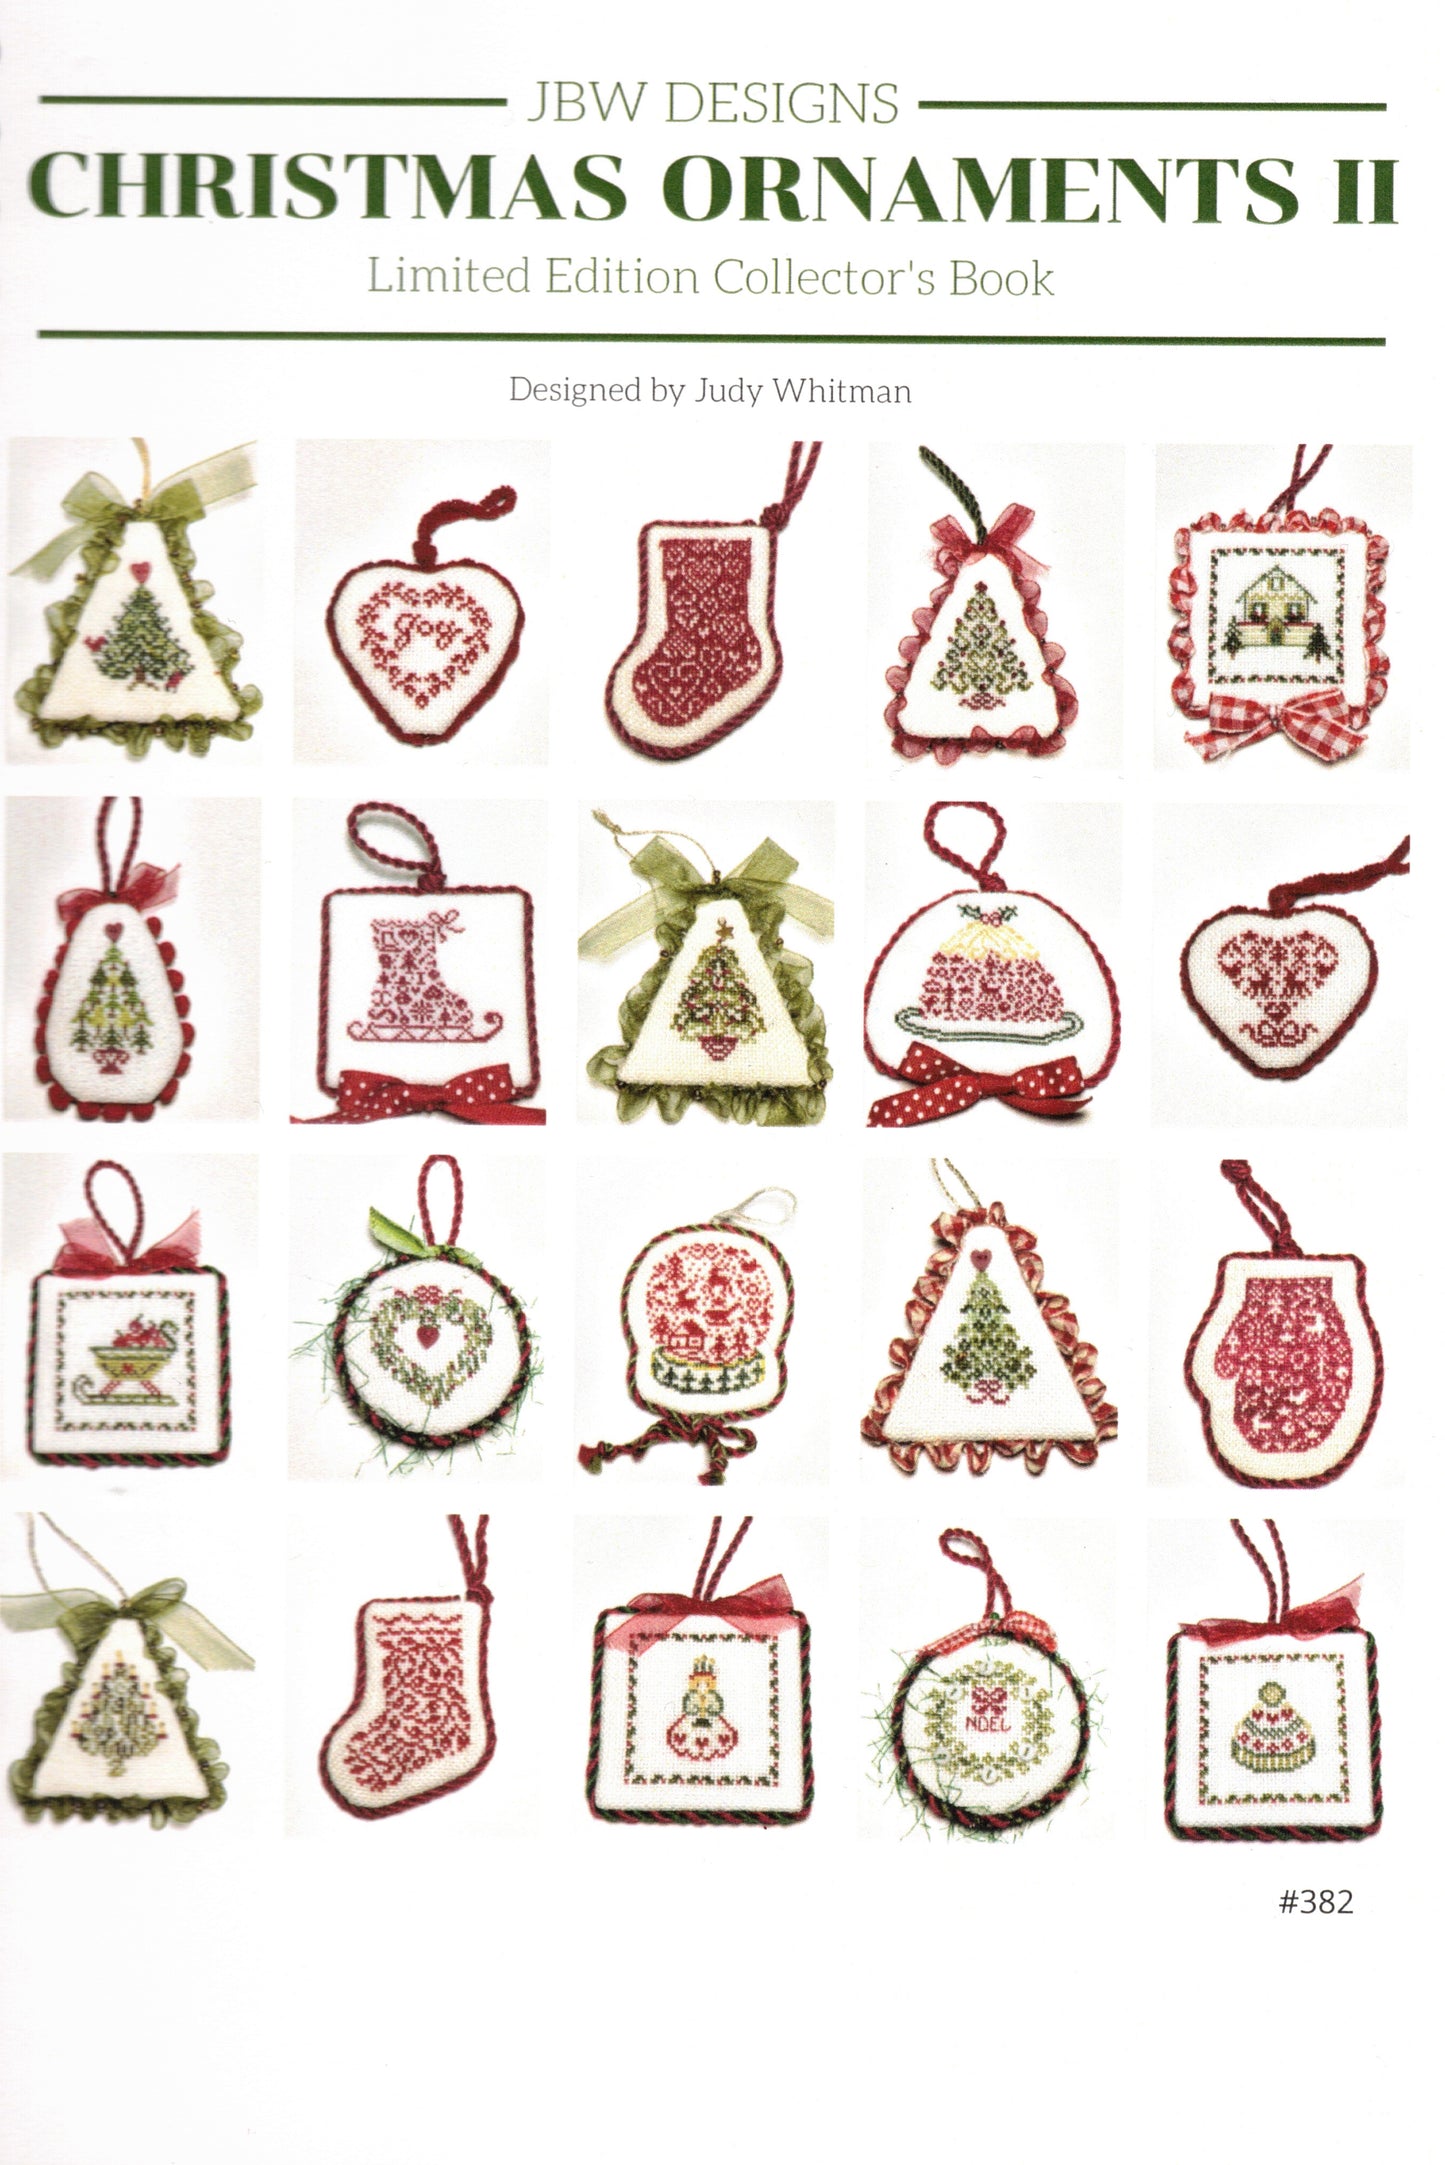 Christmas Ornaments II by JBW Designs